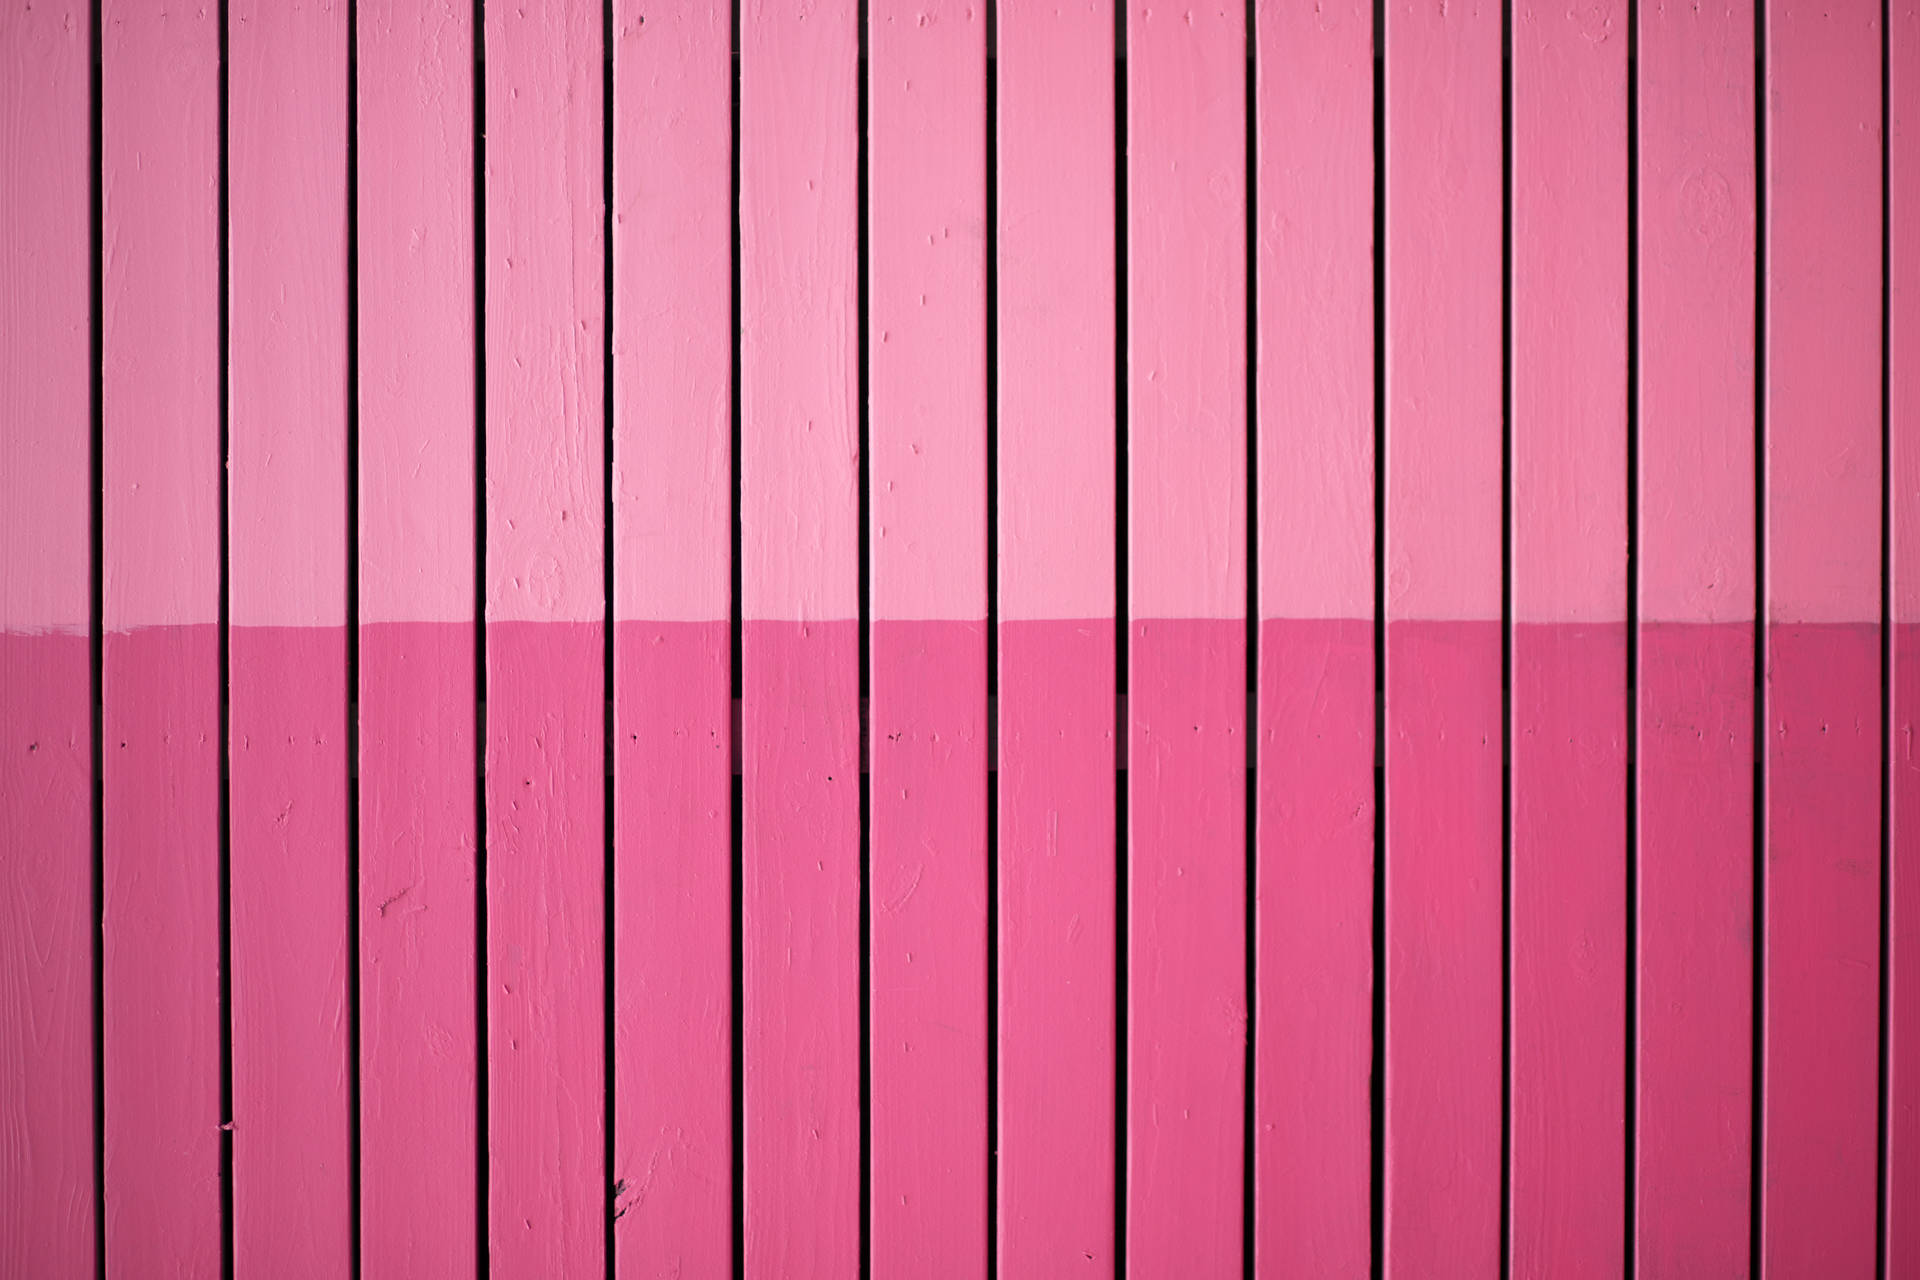 Pink 6240X4160 wallpaper